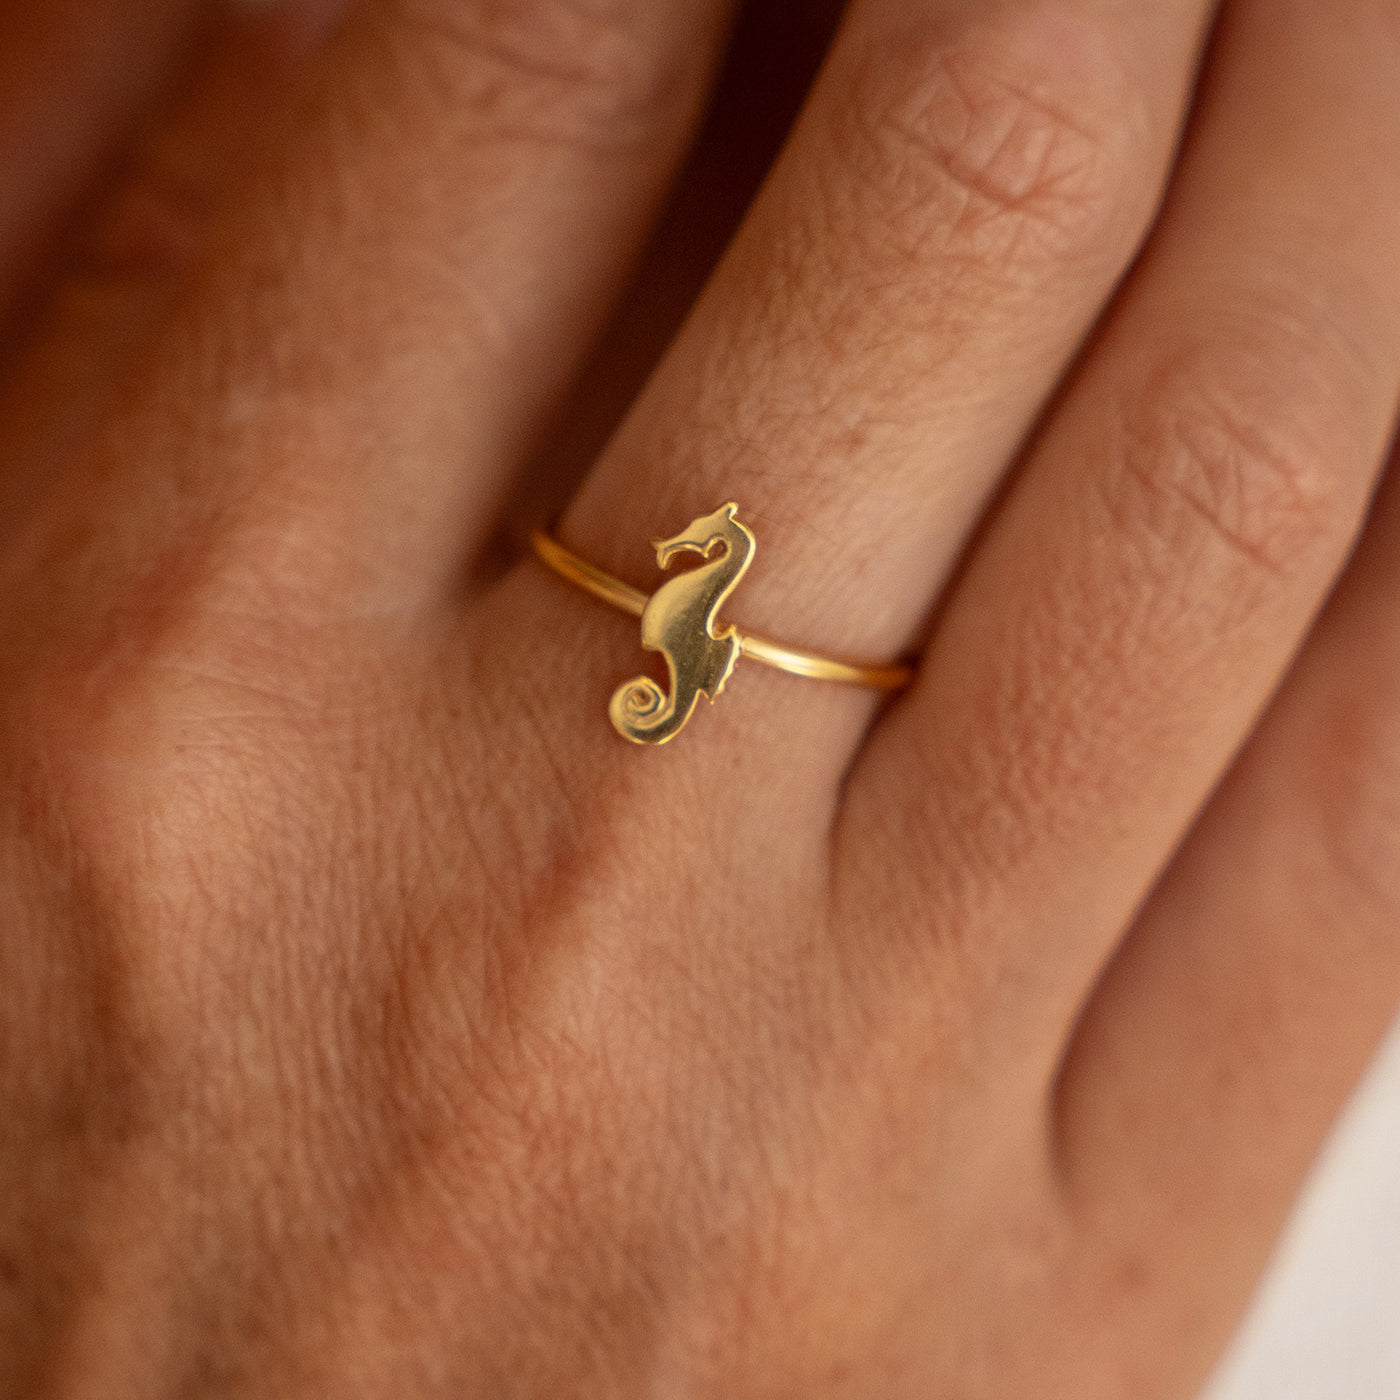 Golden Seahorse Ring